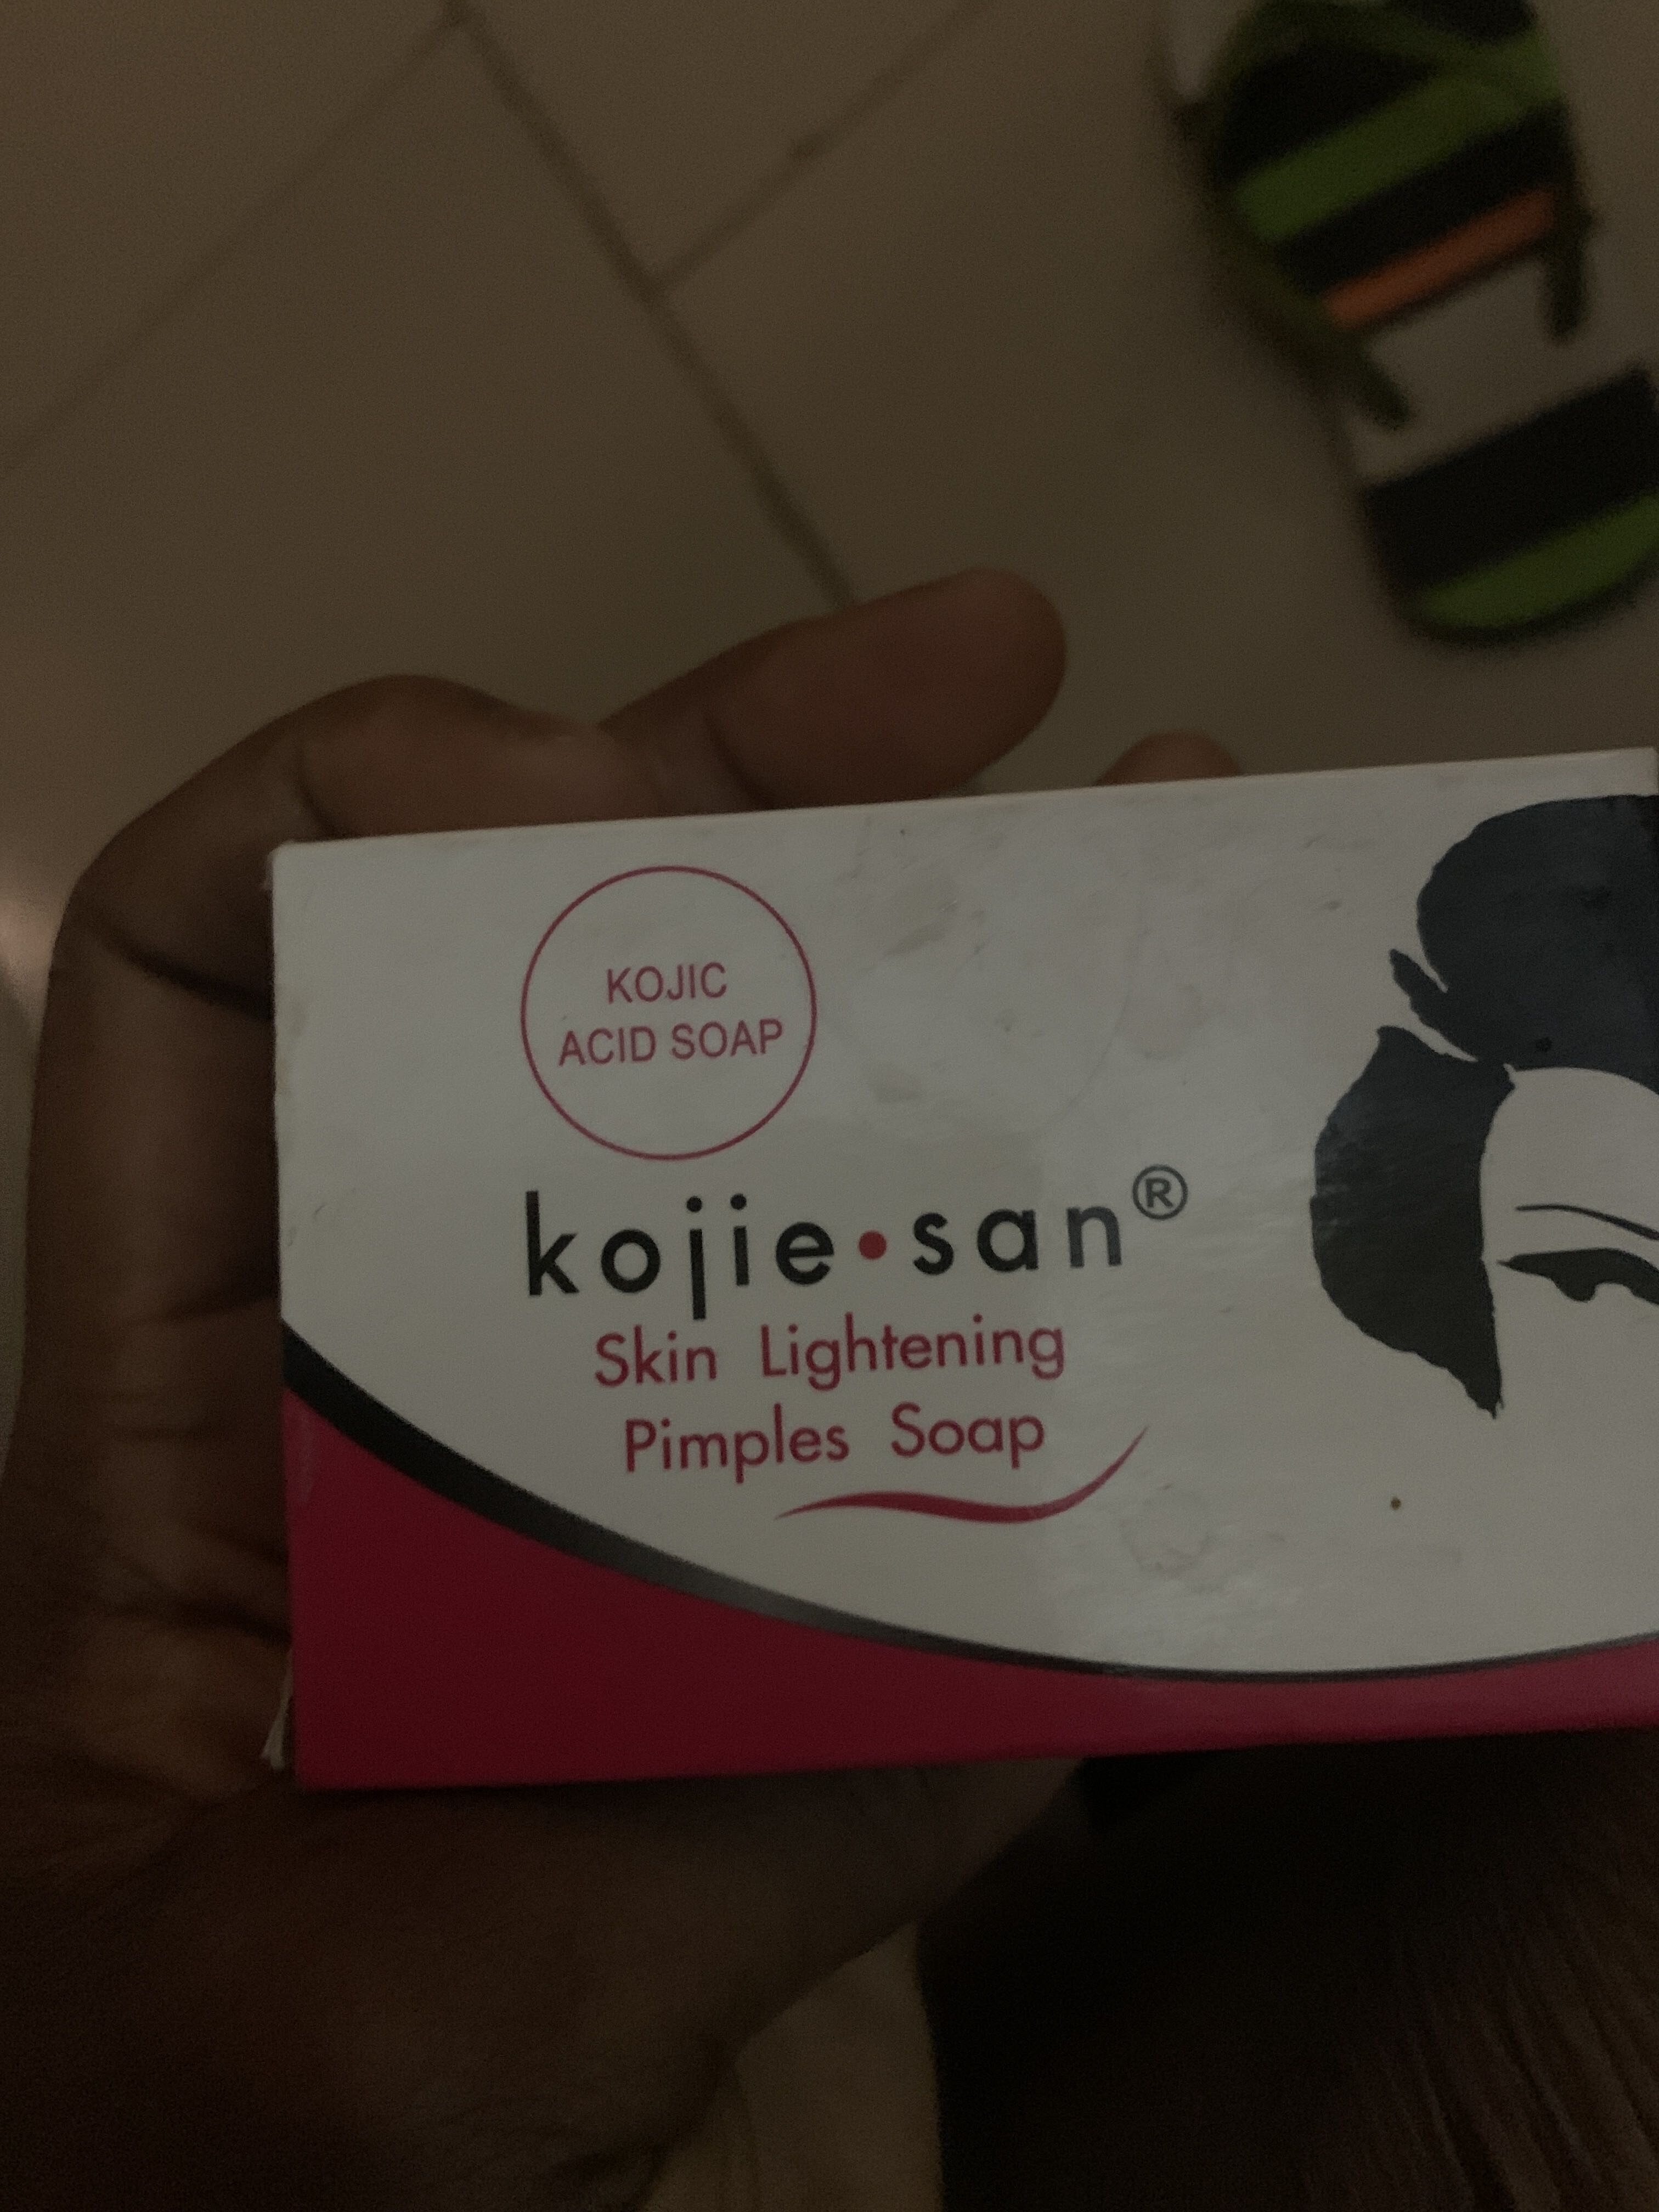 Kojie San skin lightening pimples soap - Produkt - en